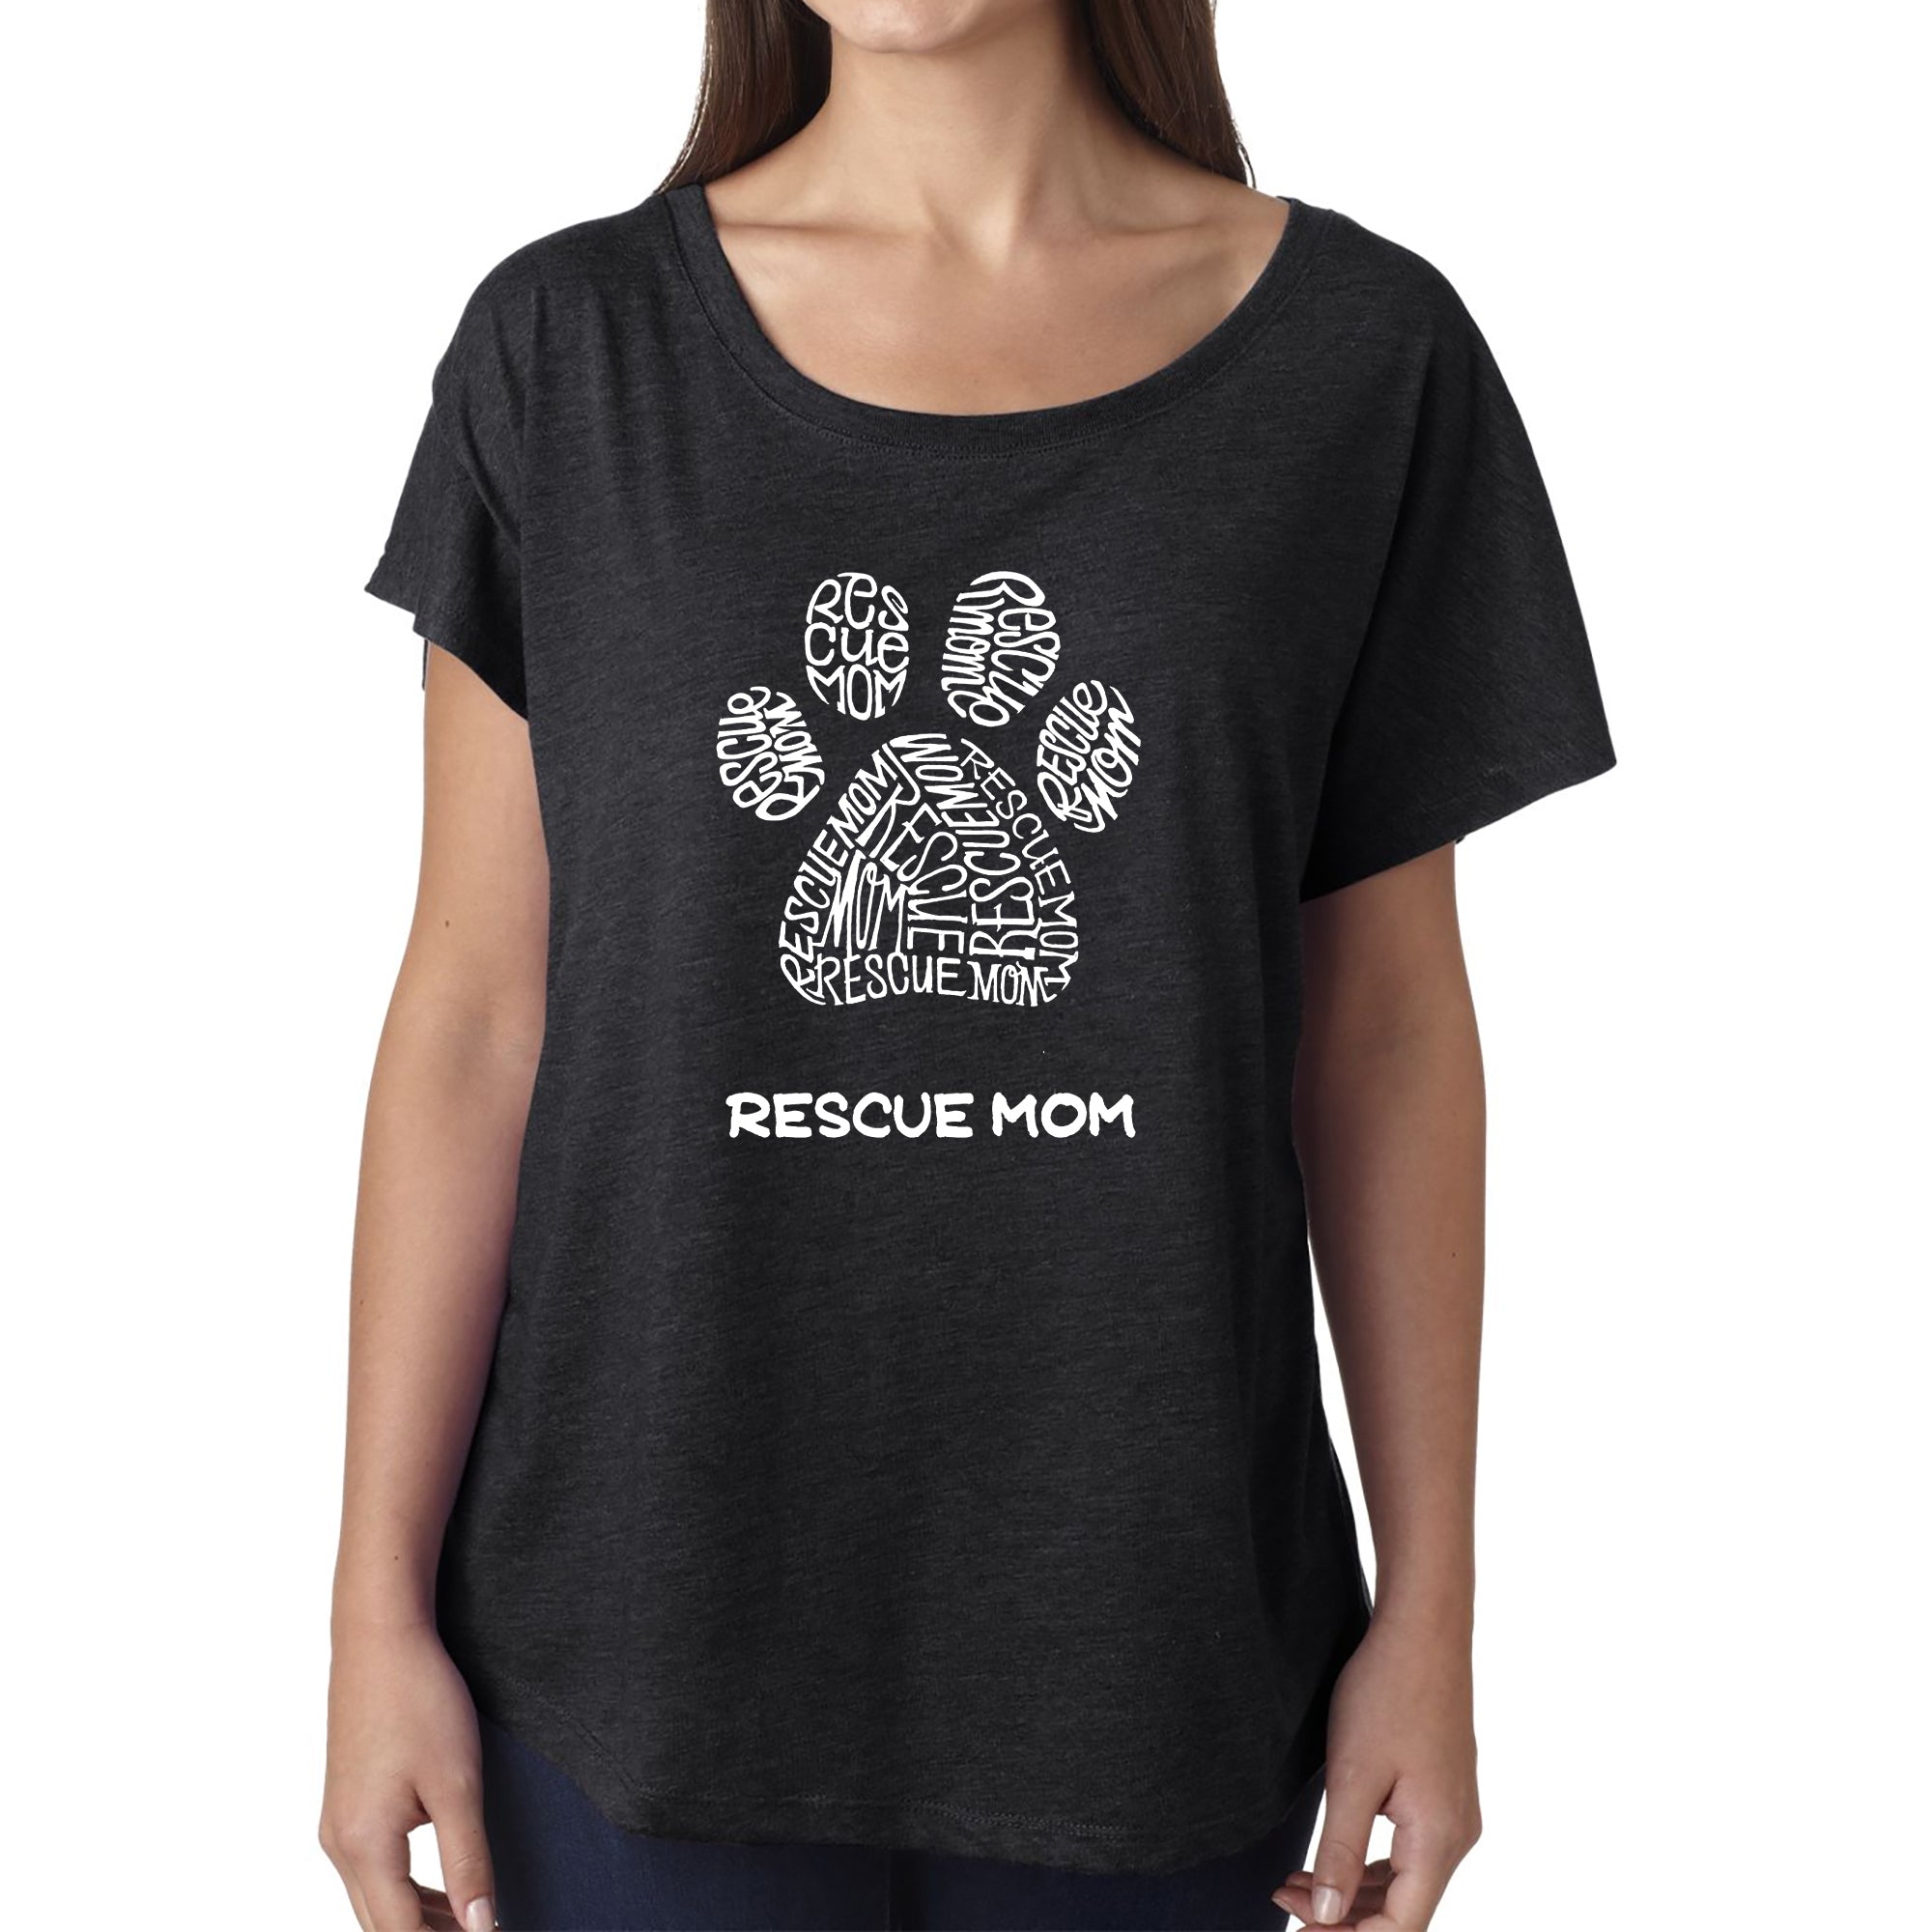 Rescue Mom - Women's Loose Fit Dolman Cut Word Art Shirt - Black - Medium